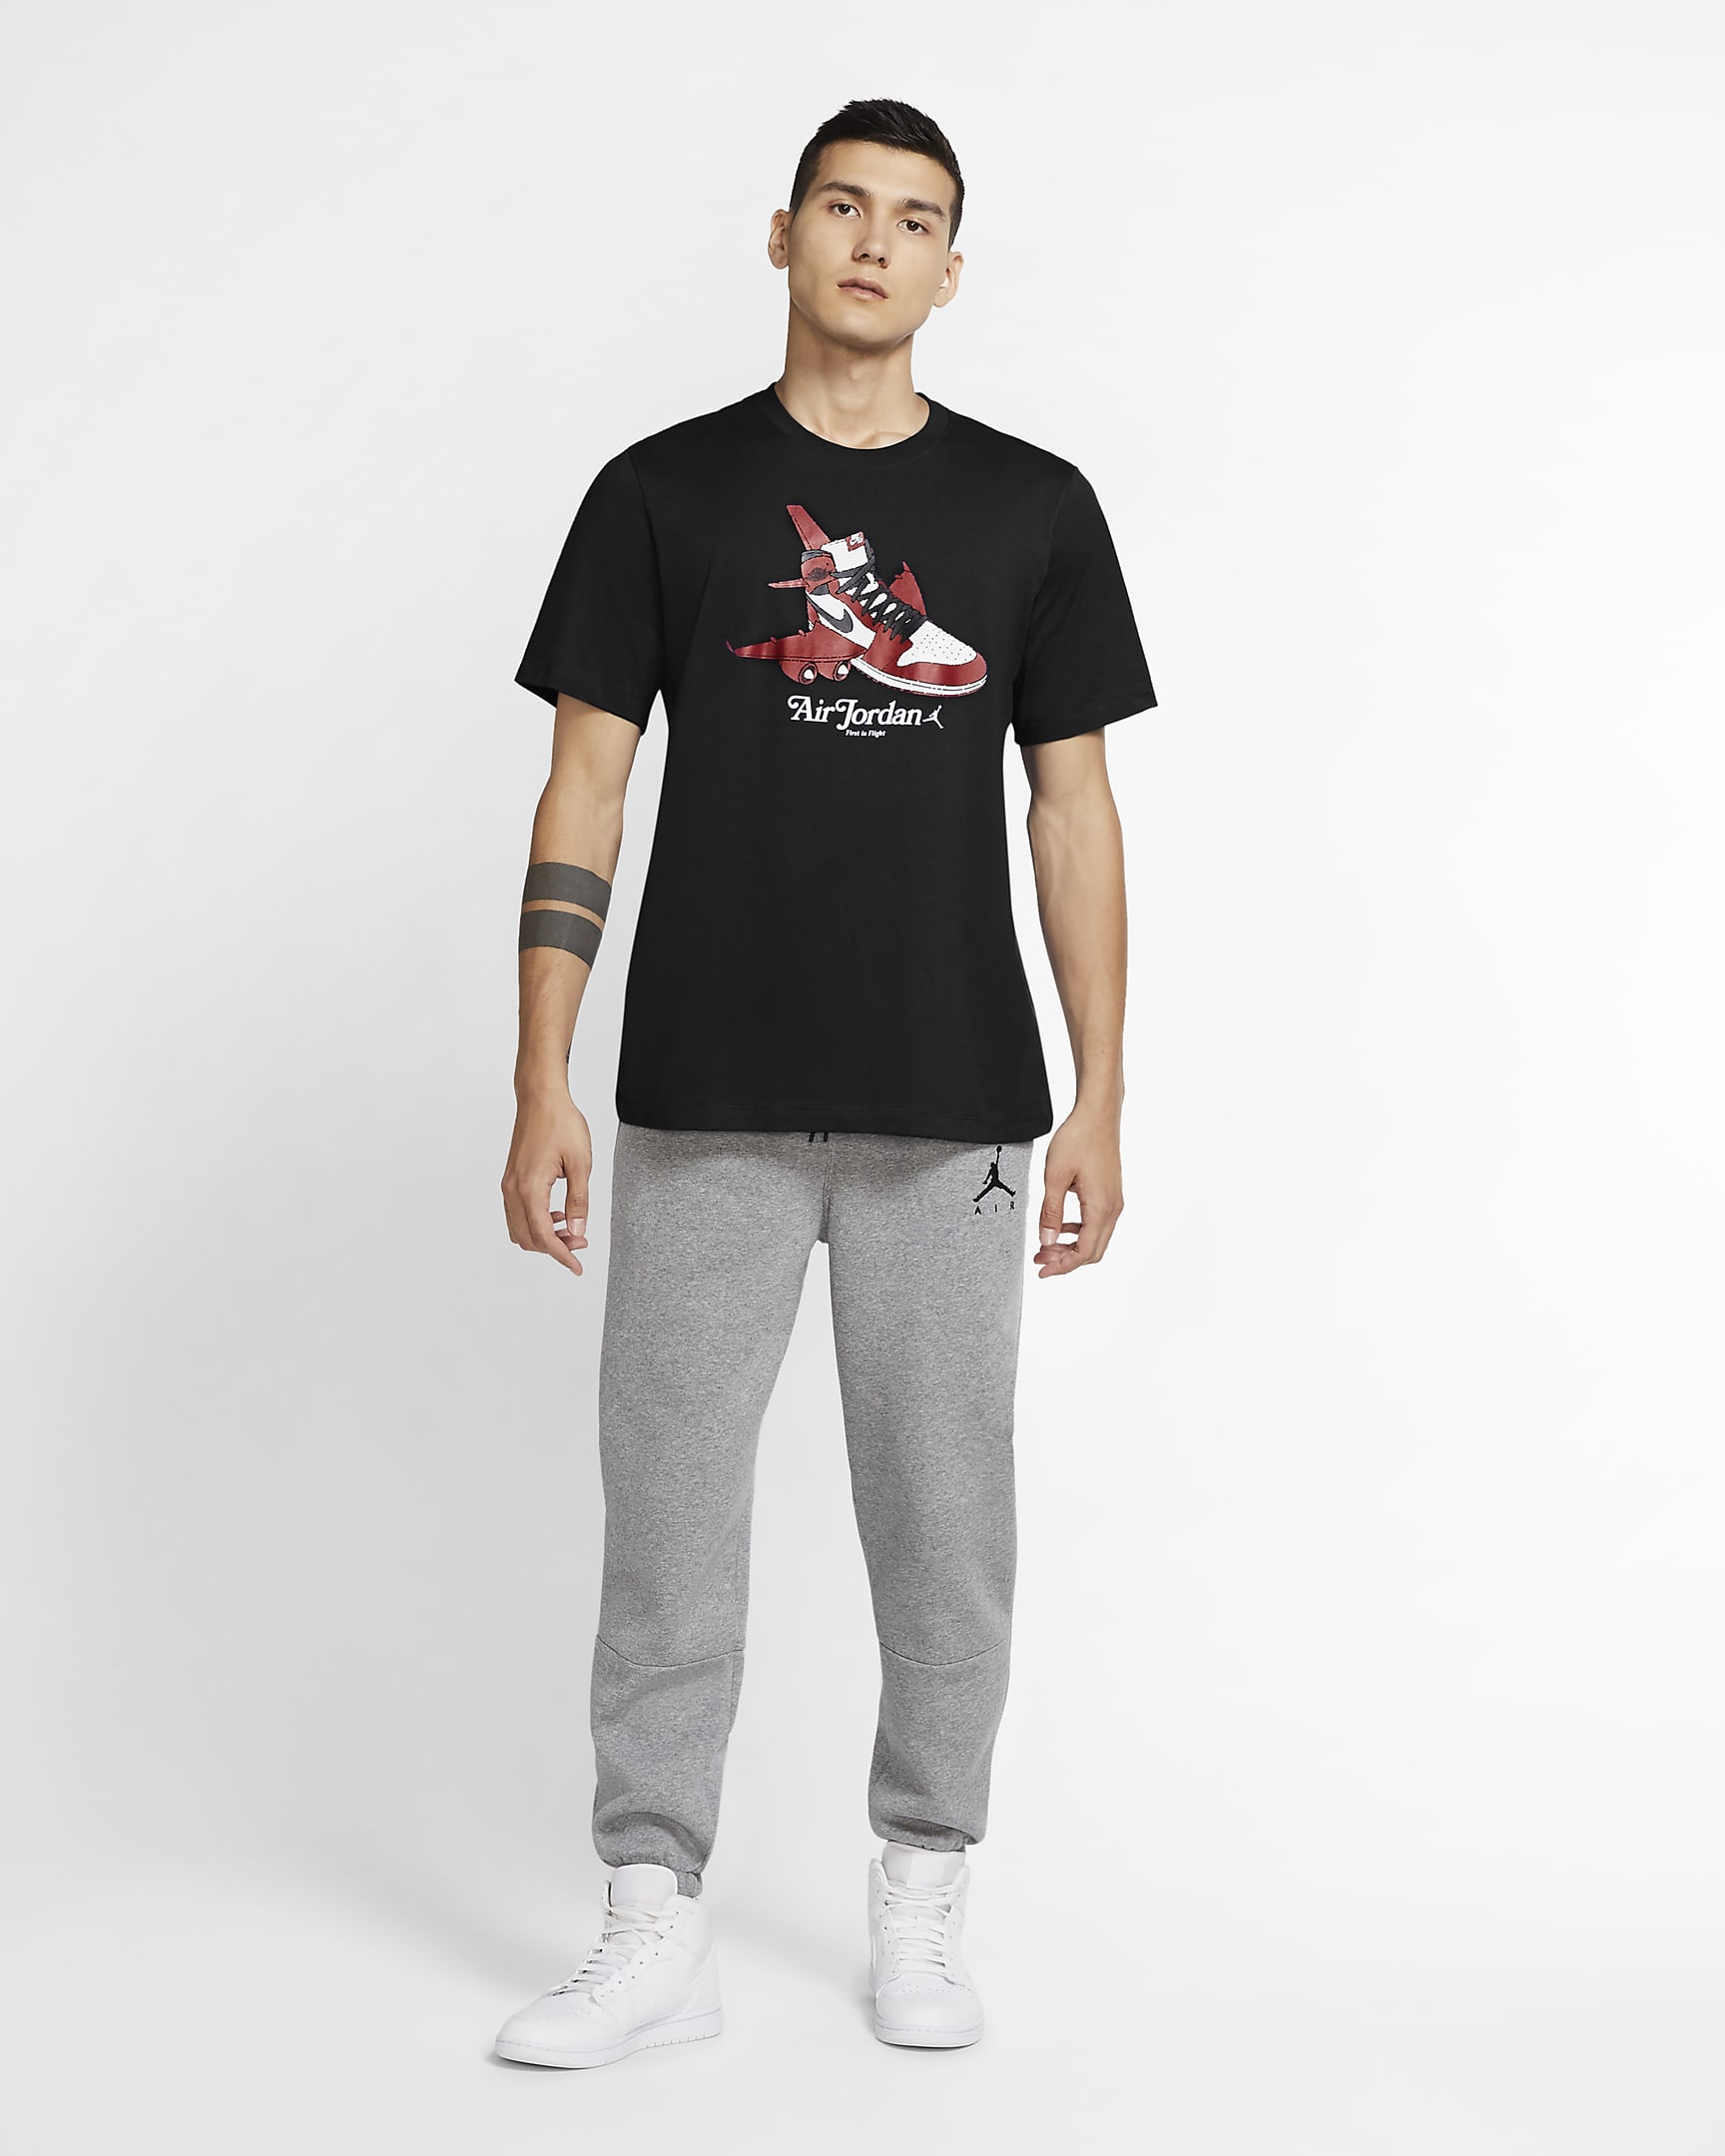 Jordan Brand Men's Short-Sleeve Graphic Crew. Nike JP